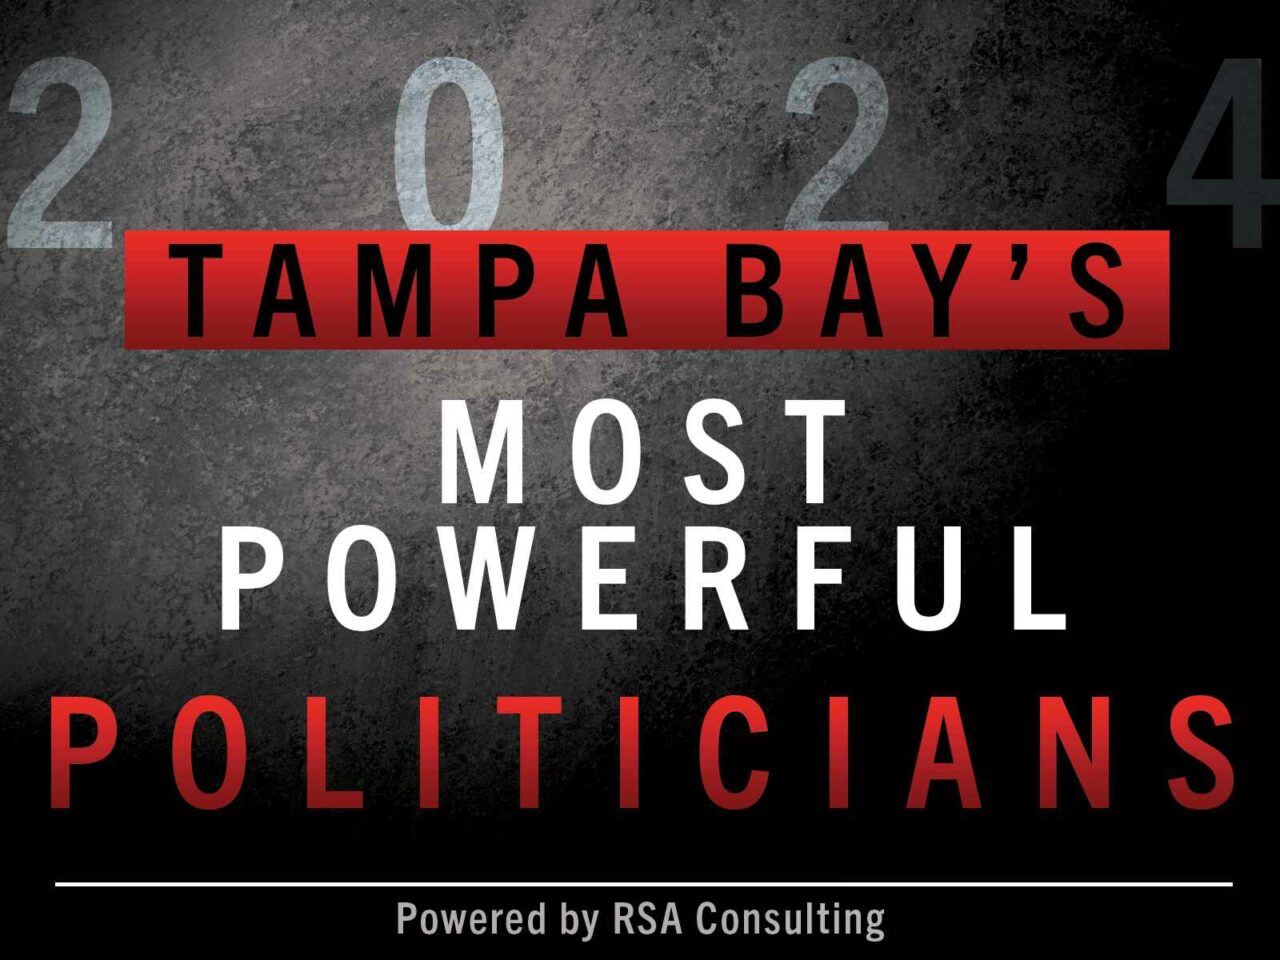 TampaBayPoliticians_0424_main-1280x960.jpg